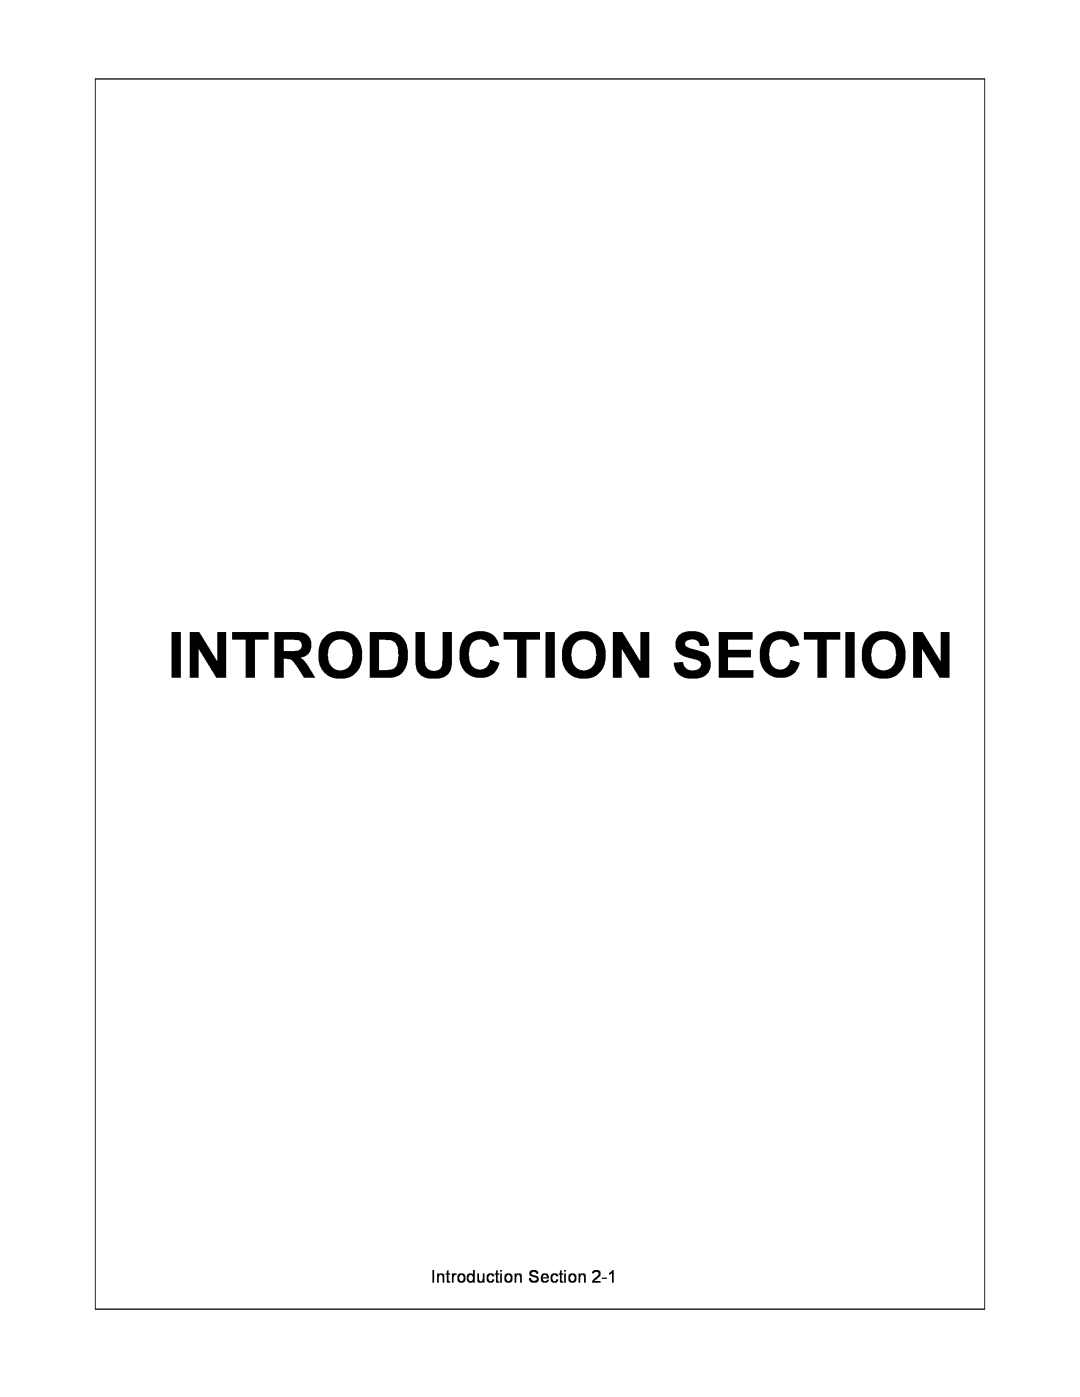 Alamo 3109 manual Introduction Section 